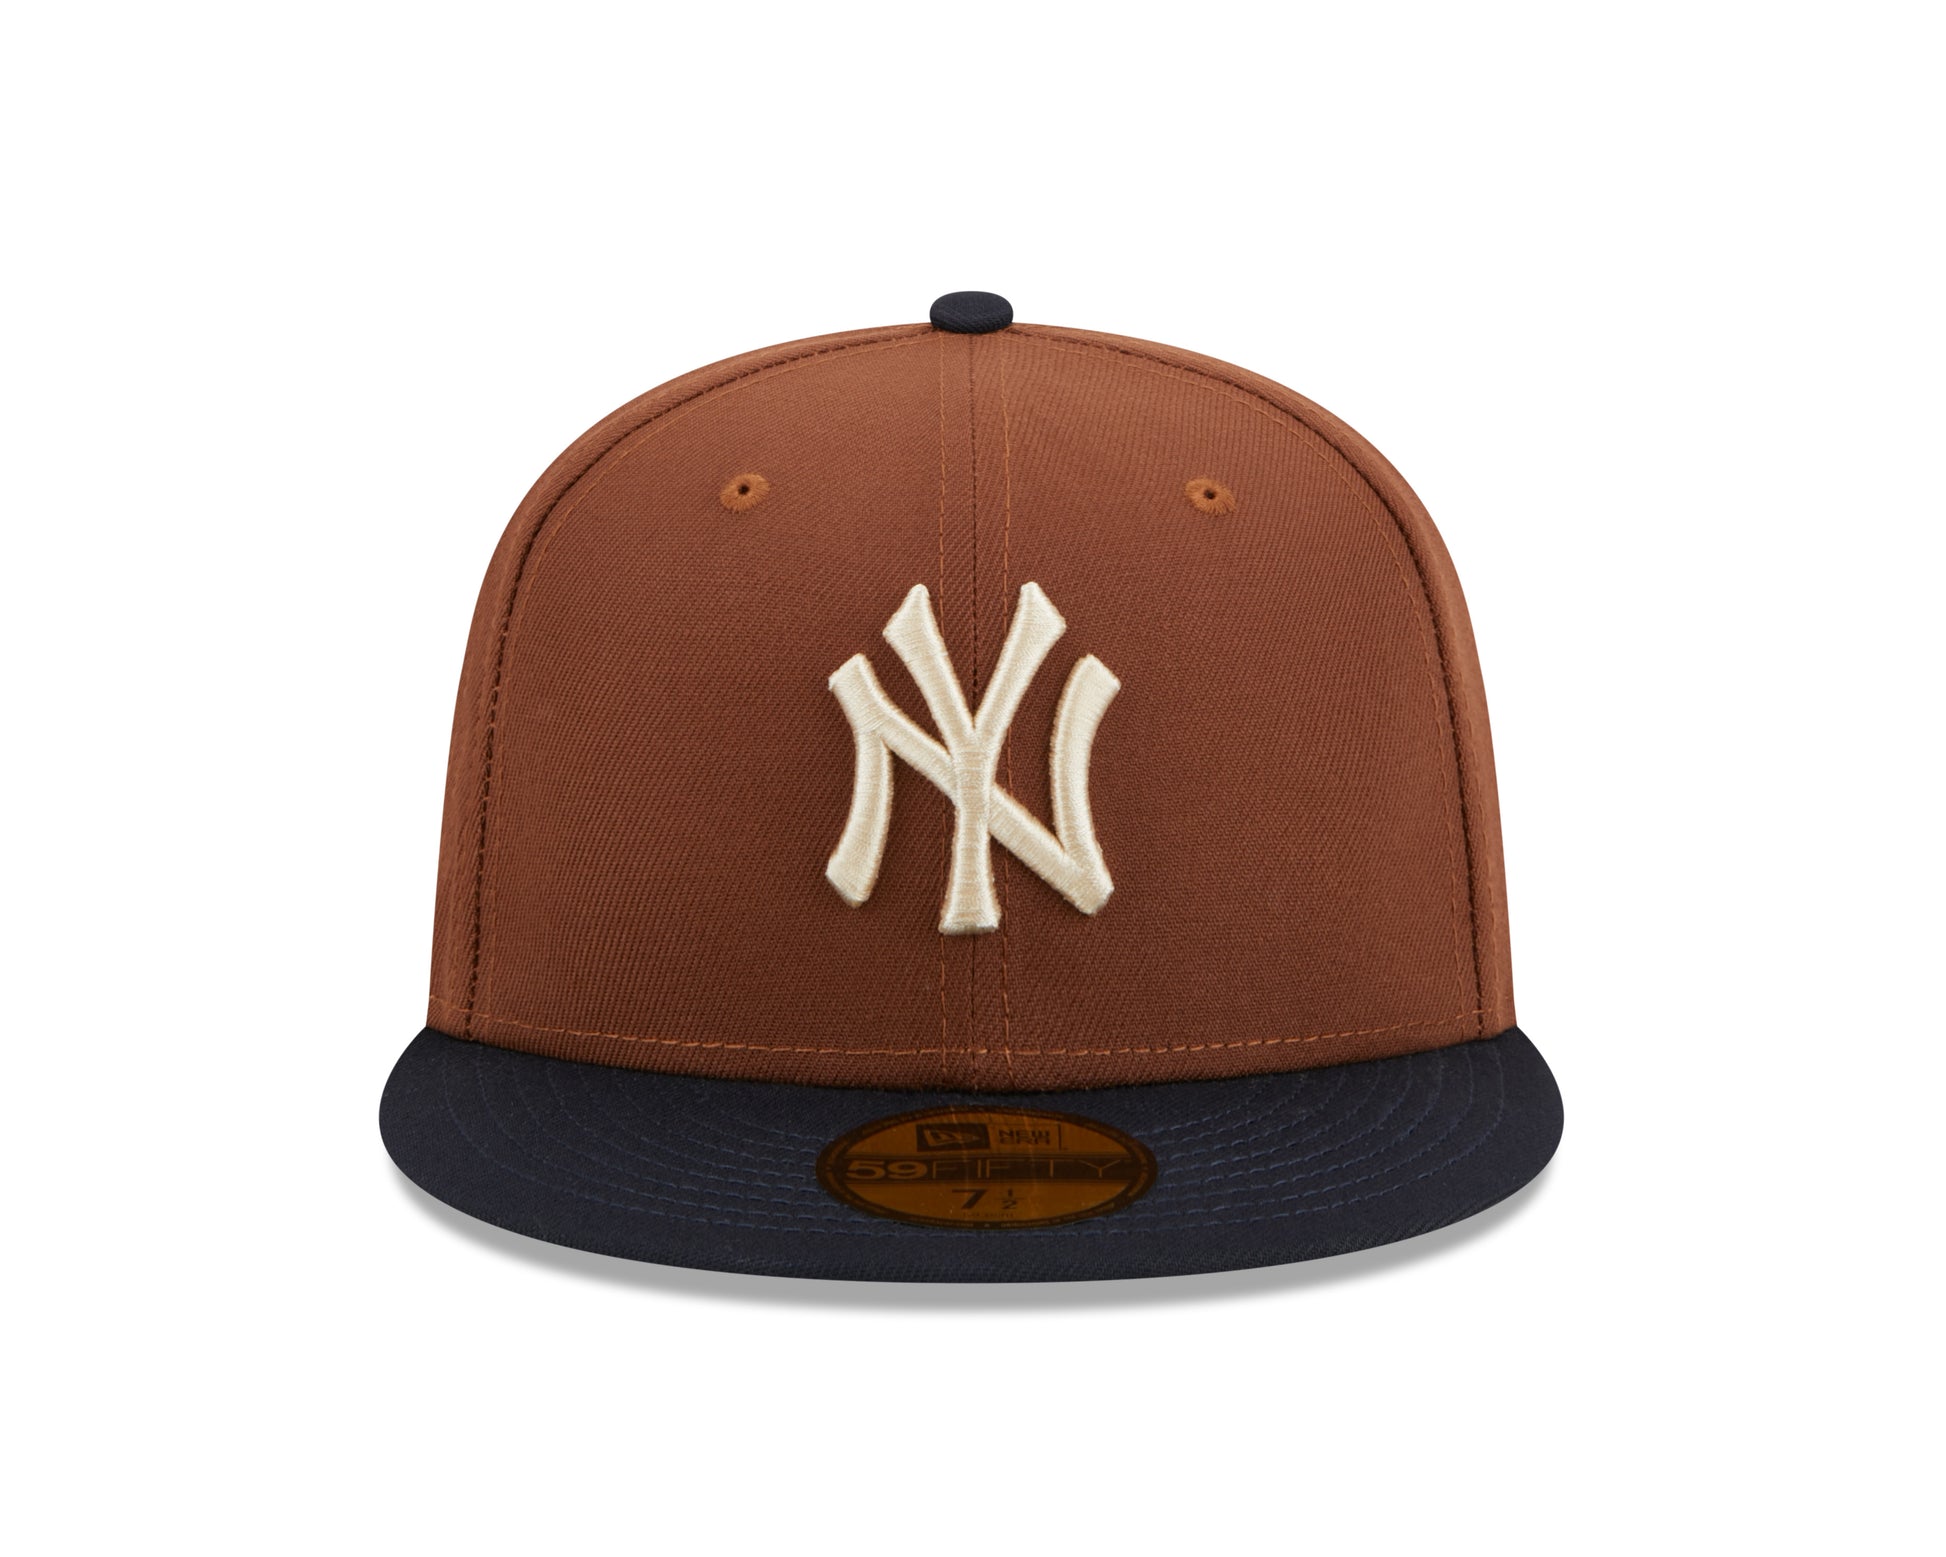 New Era - New York Yankees - HARVEST 59FIFTY Cap - Brown - Headz Up 